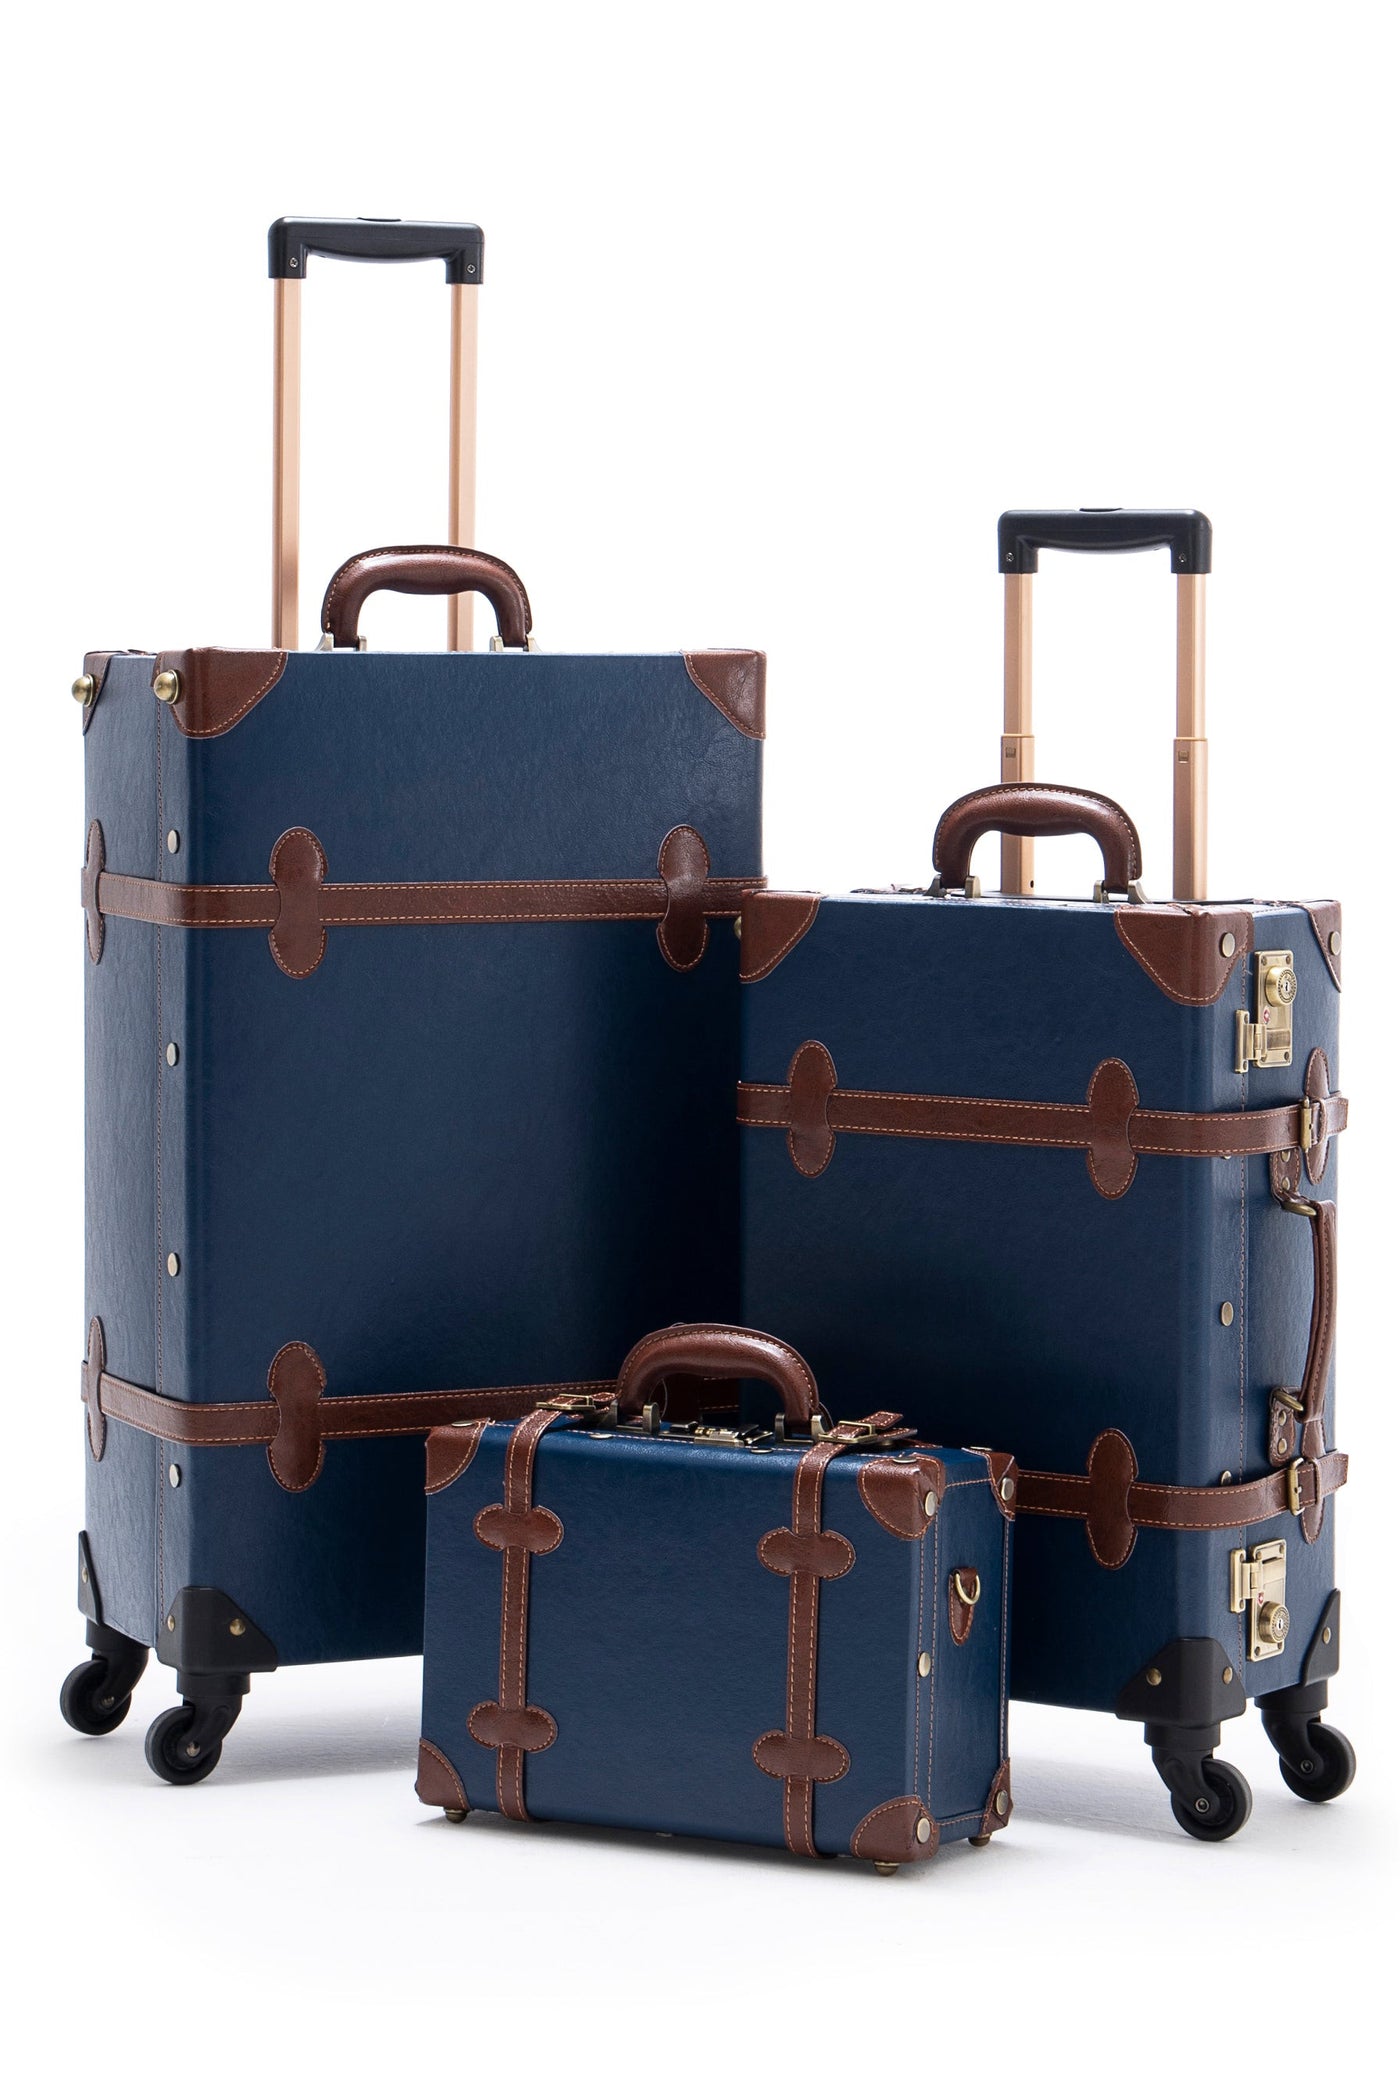 Minimalism 3 Pieces Luggage Set - Navy Blue's